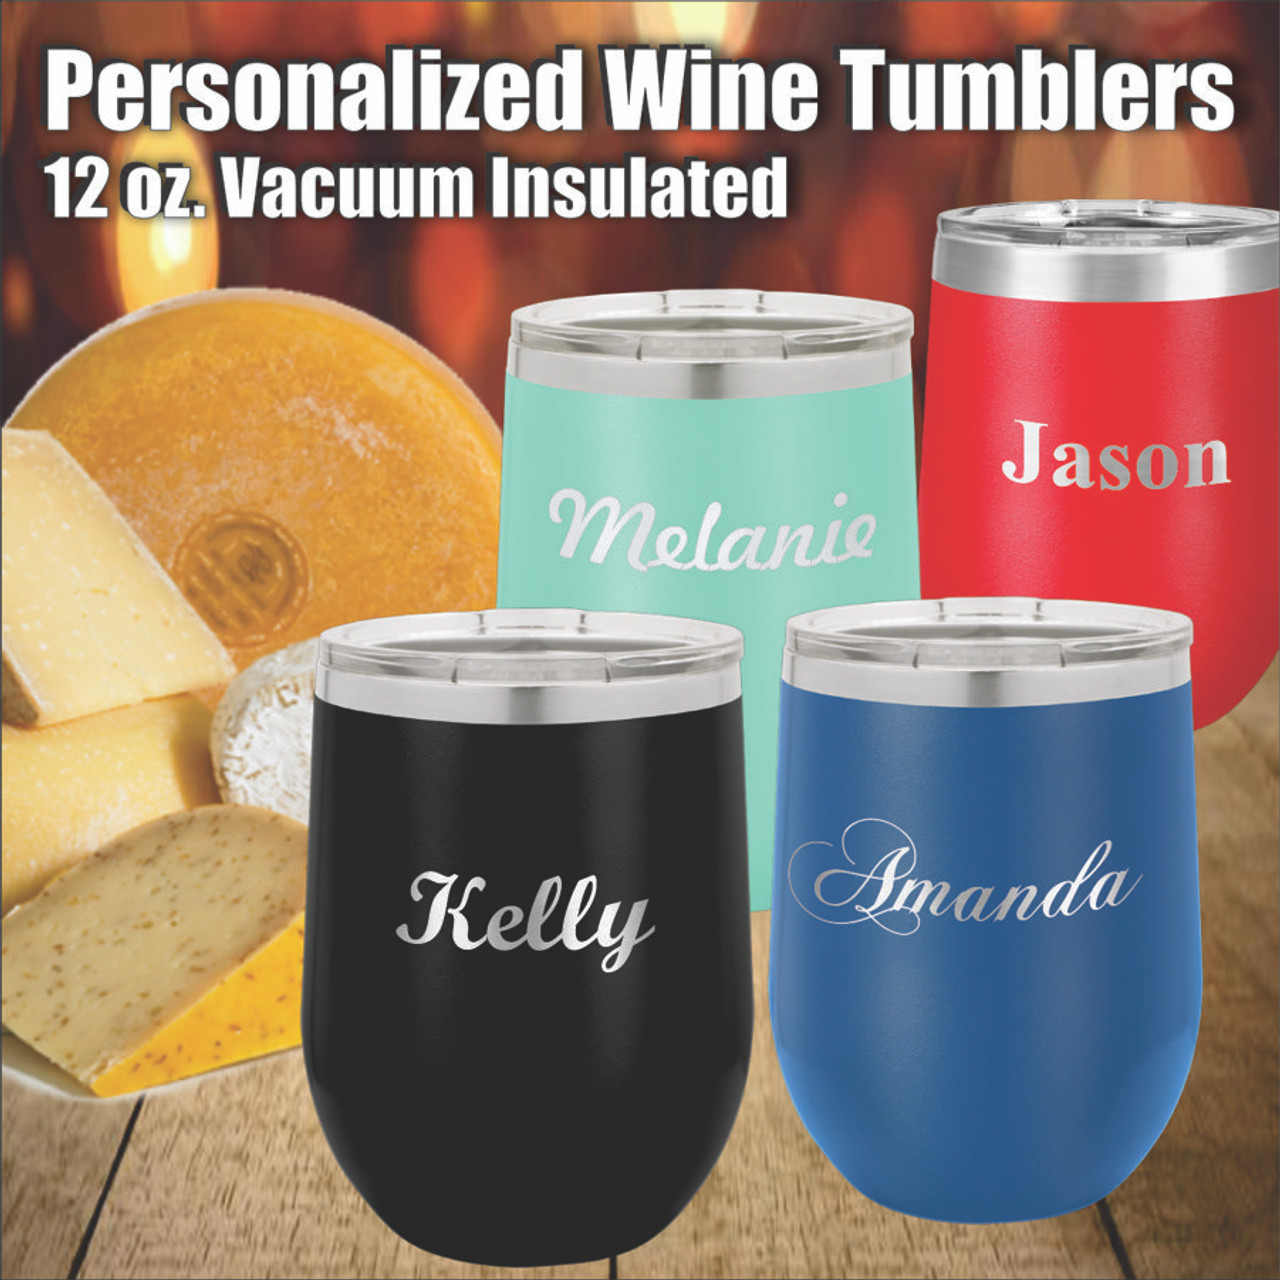 Personalized Wine Tumbler - 12 oz. Vacuum Insulated